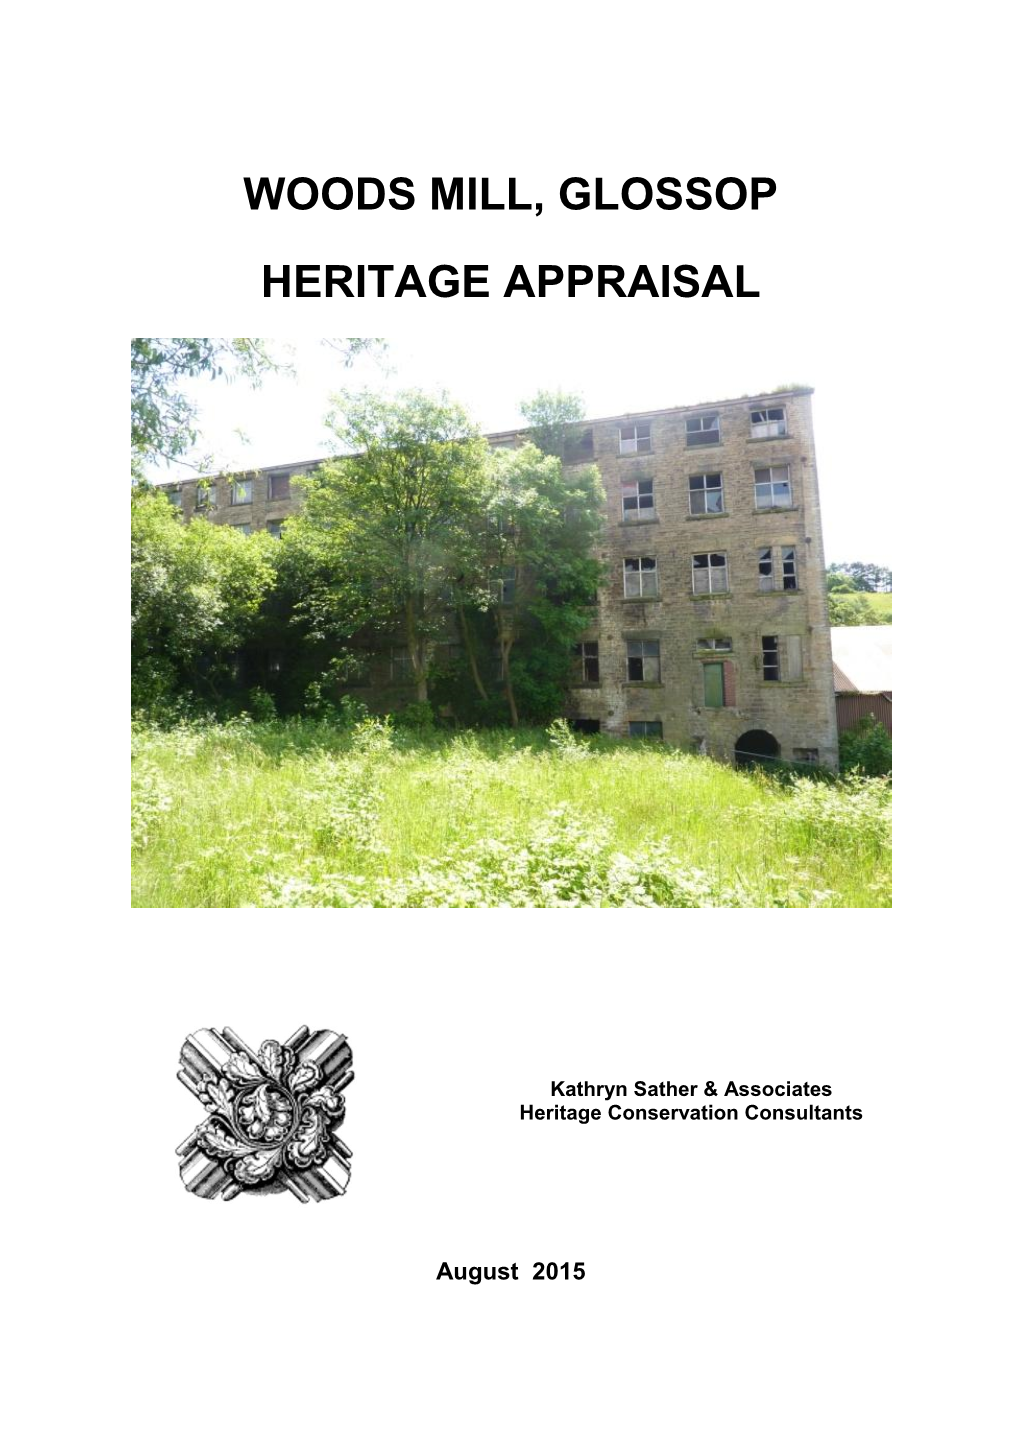 Woods Mill, Glossop Heritage Appraisal